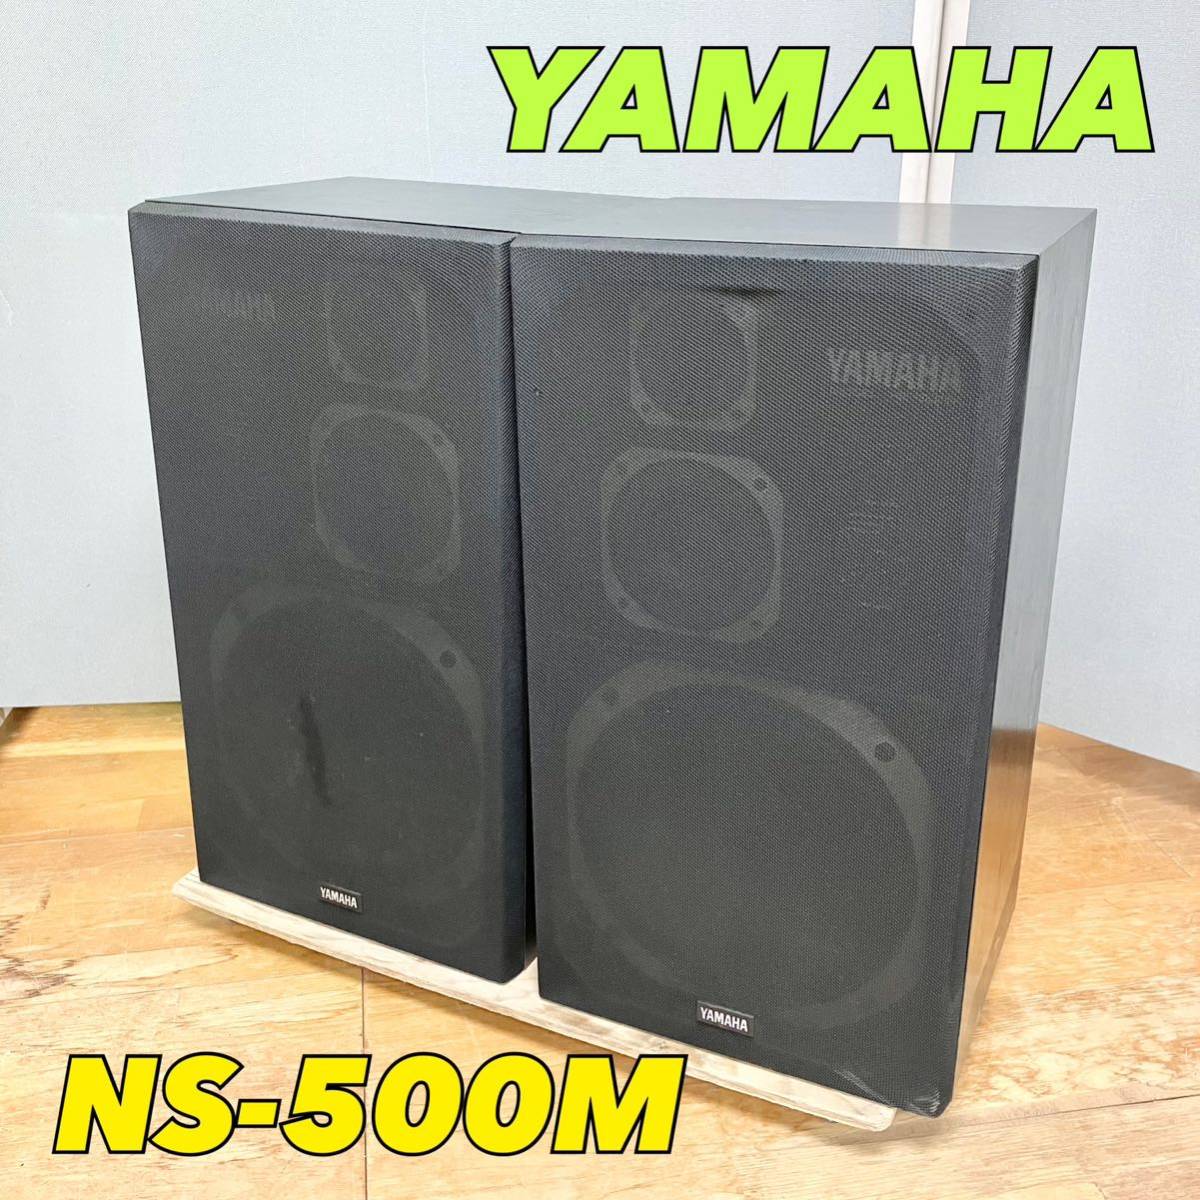 Yahoo!オークション -「yamaha ns-500m」の落札相場・落札価格